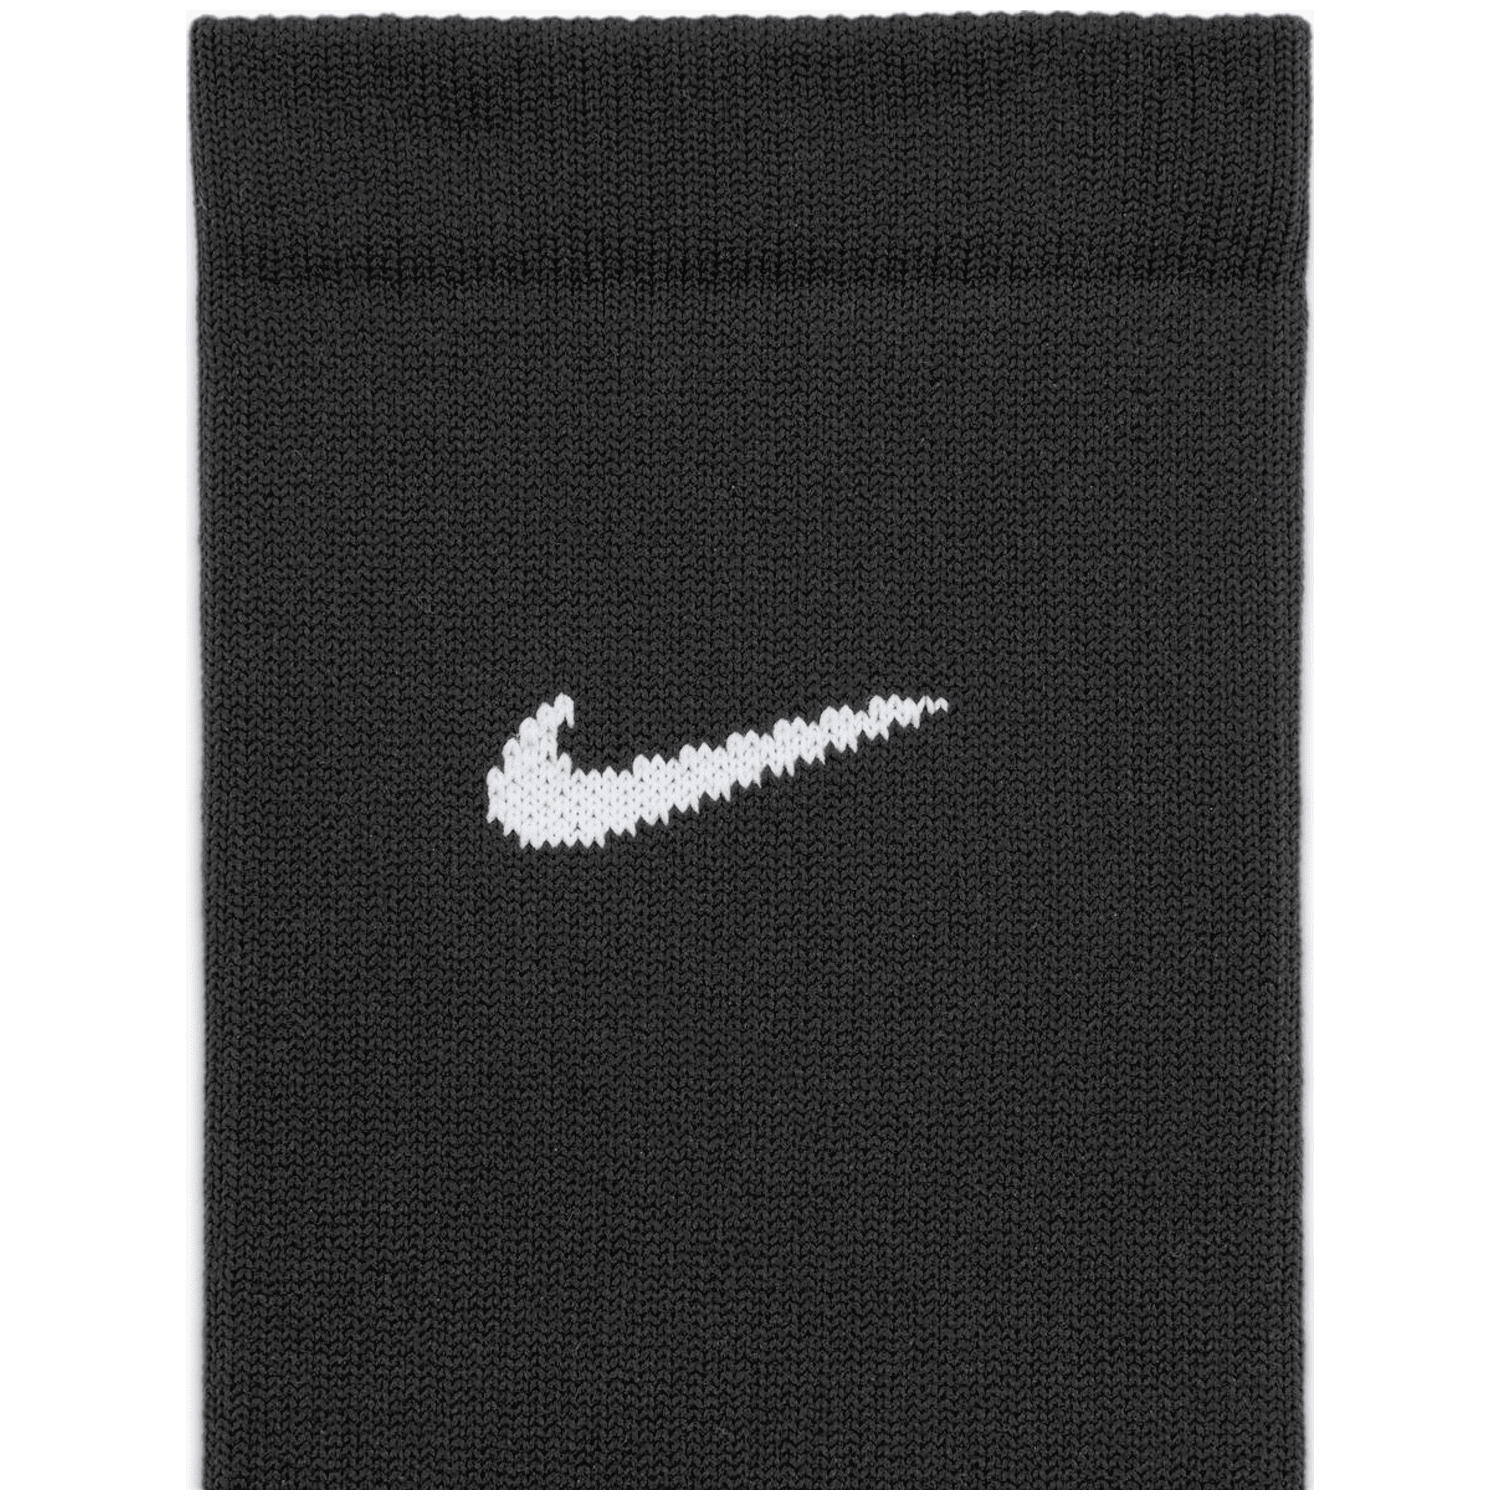 Nike U NK STRIKE CREW WC22 Unisex Socken